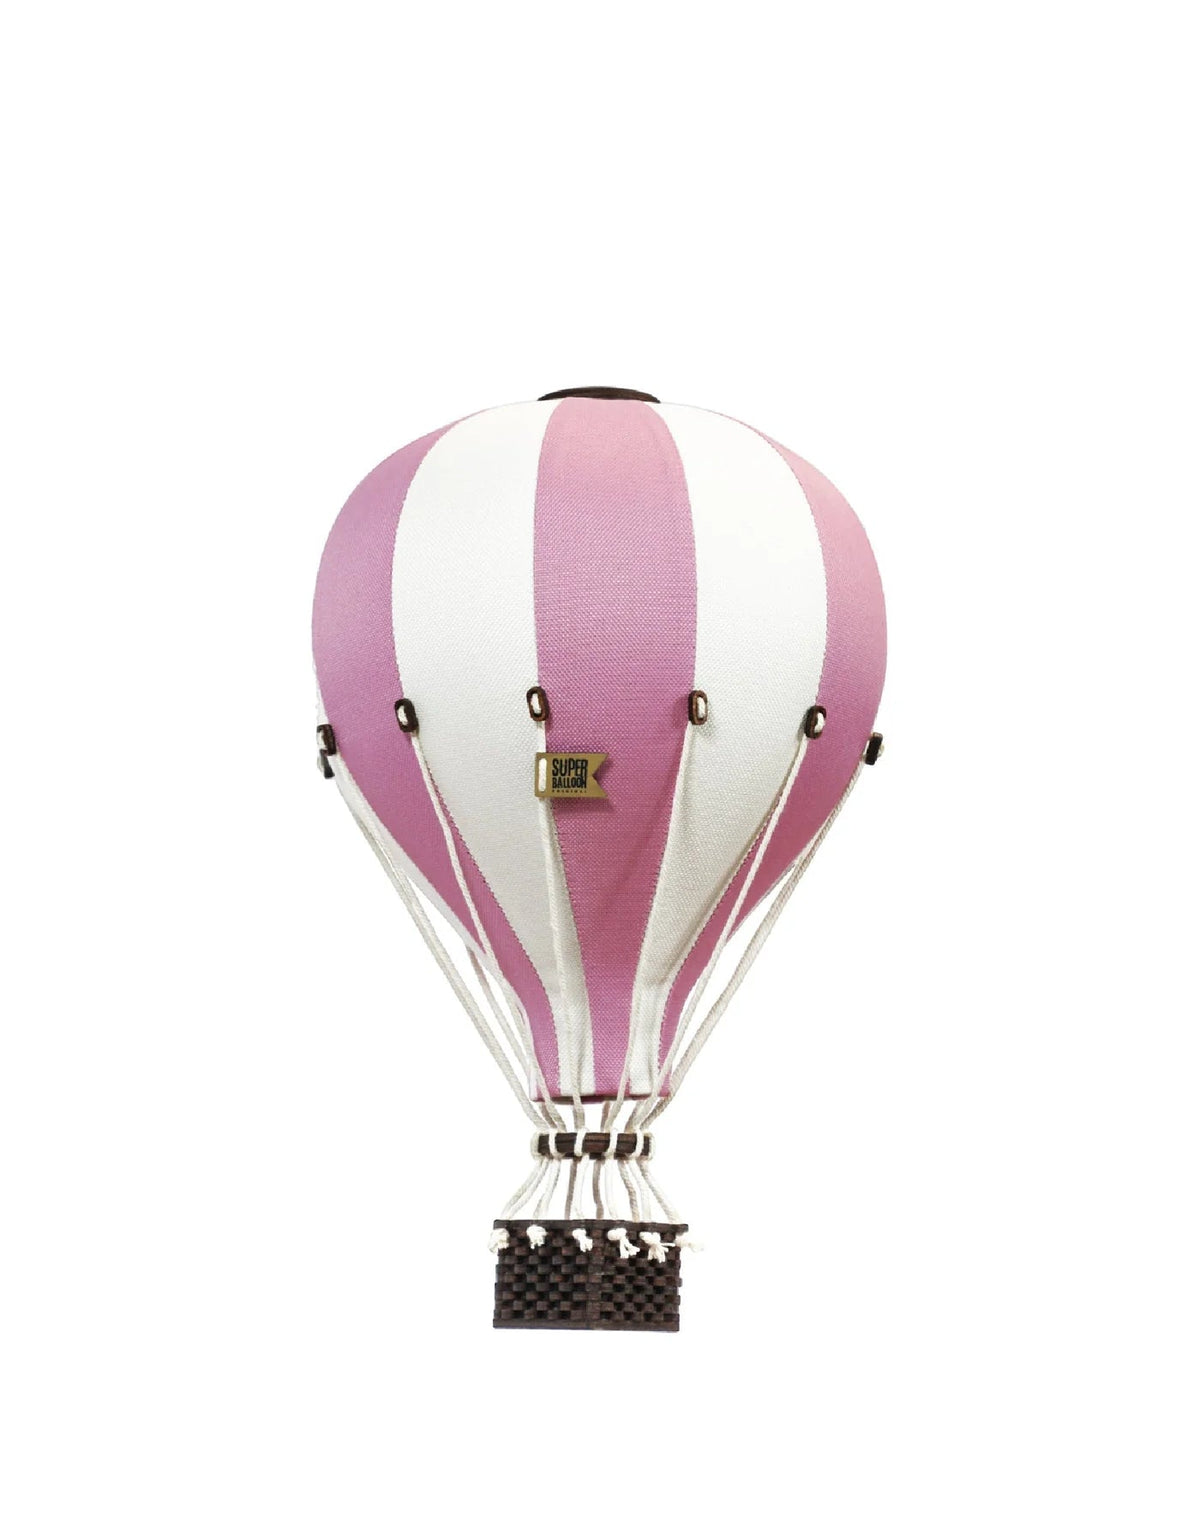 Decorative Hot Air Balloon | Small by Super Balloon - Maude Kids Decor